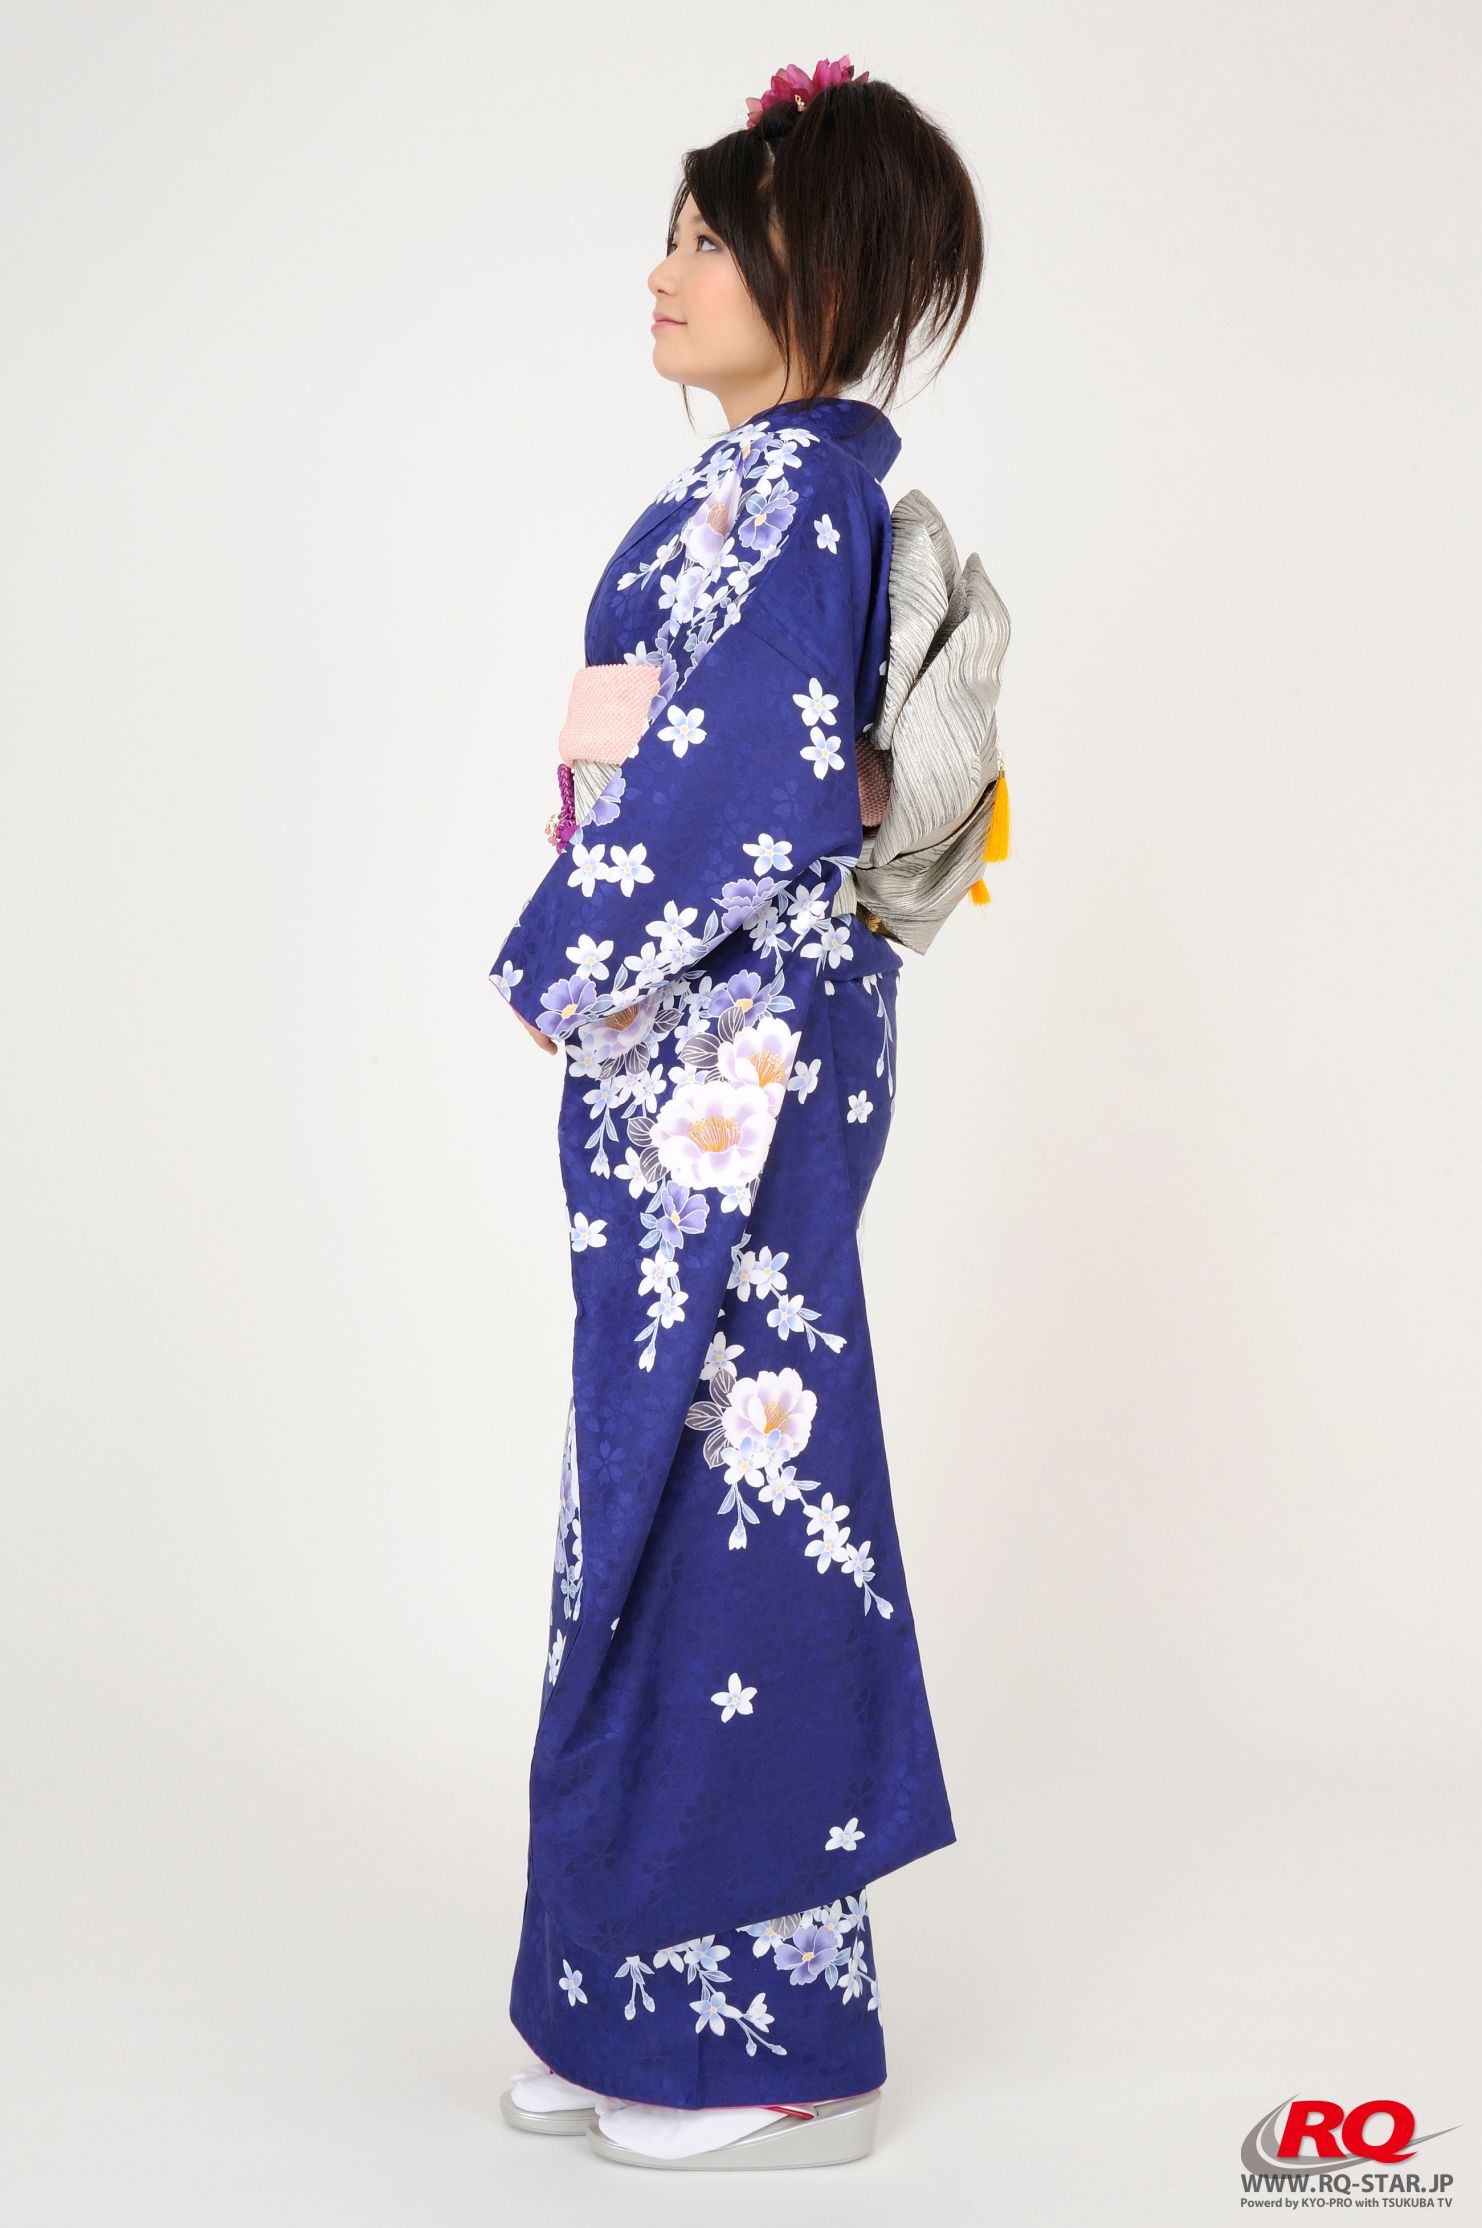 [RQ-STAR] NO.00068 古崎瞳 謹賀新年 Kimono – Happy New Year 和服系列33